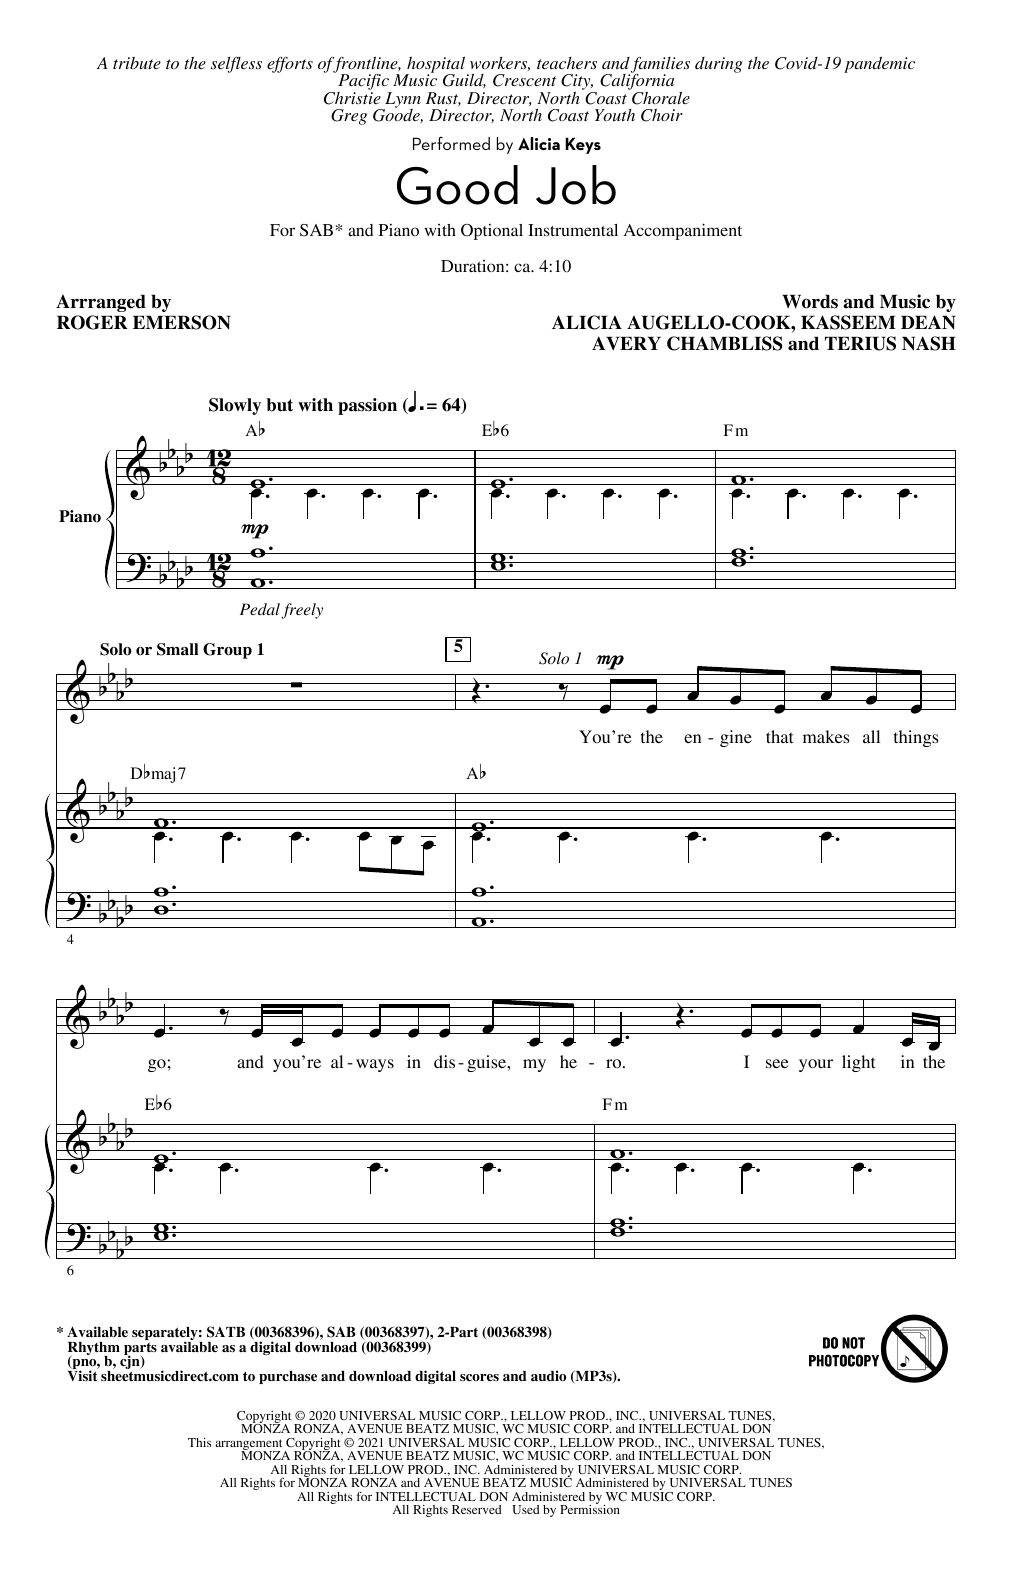 Alicia Keys Good Job (arr. Roger Emerson) Sheet Music Notes & Chords for 2-Part Choir - Download or Print PDF